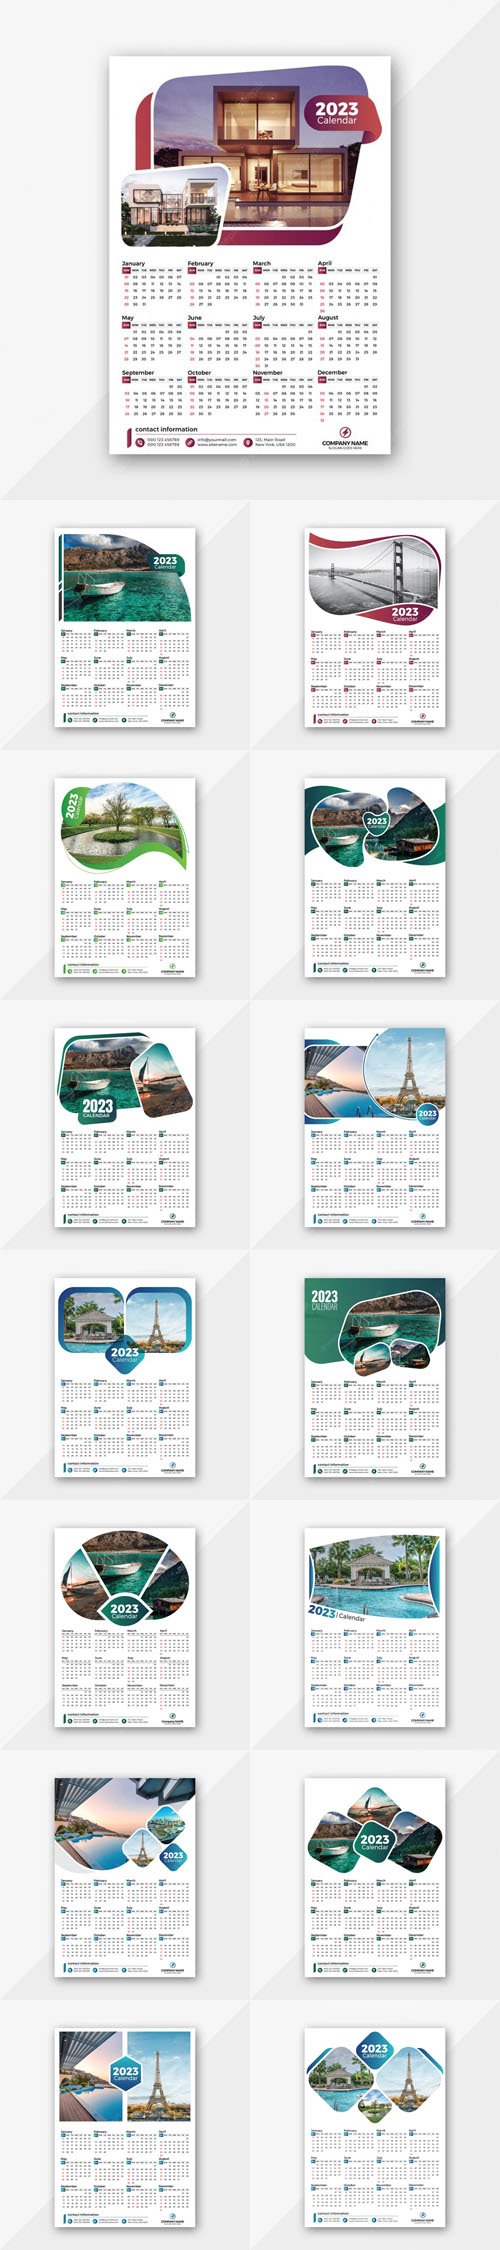 New Year 2023 Wall Calendars - 15 Vector Design Print Templates